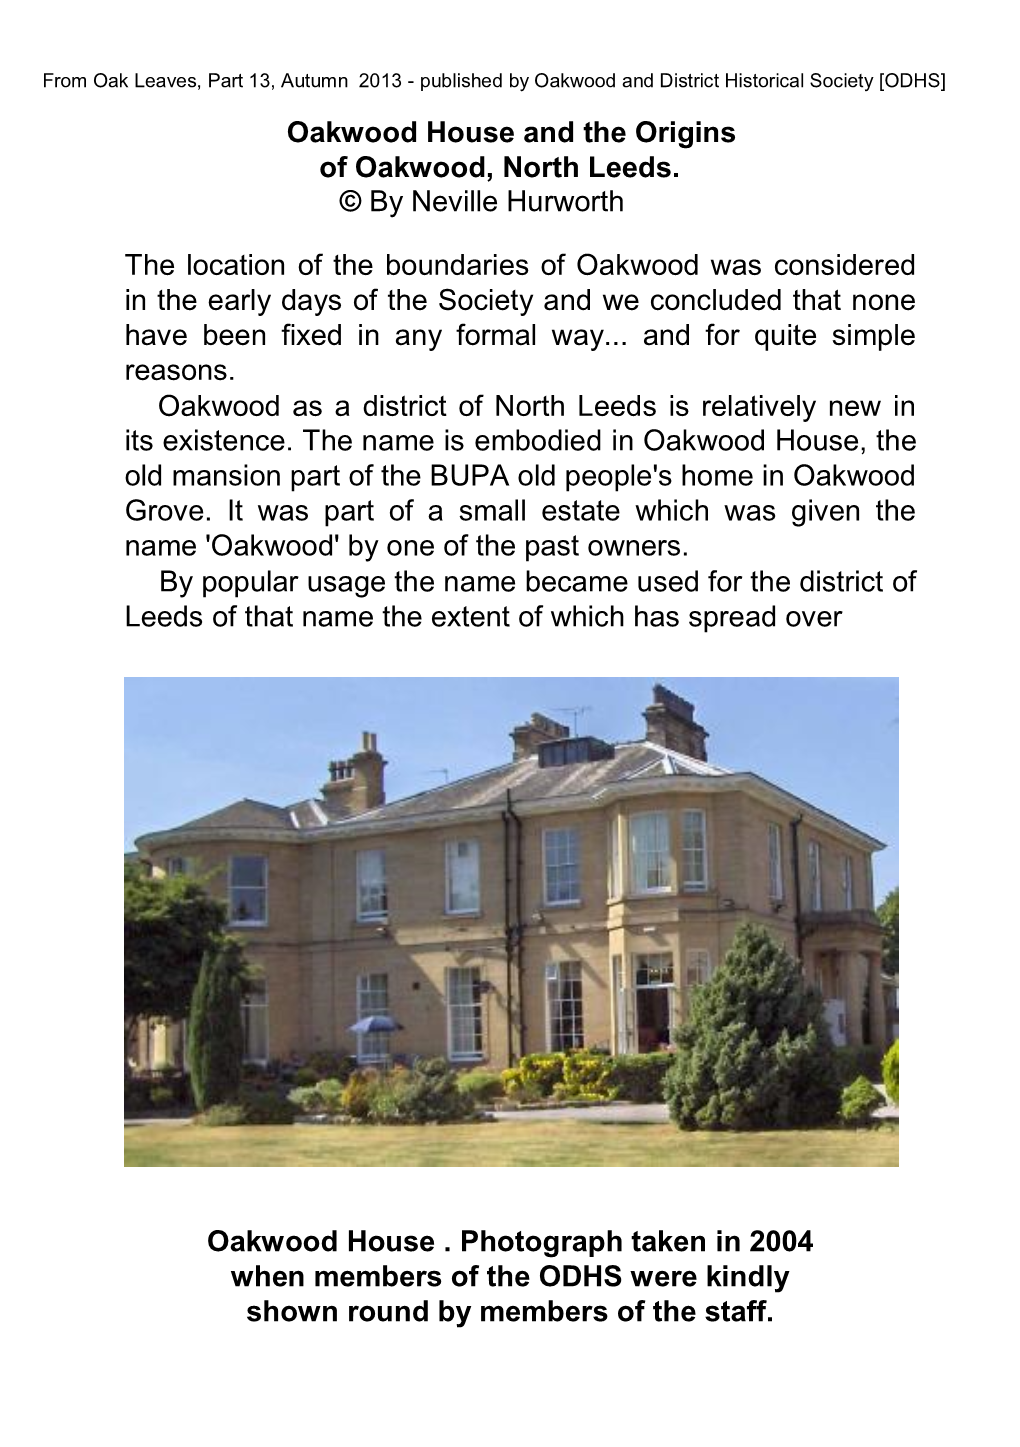 Oakwood House and the Origins of Oakwood, North Leeds